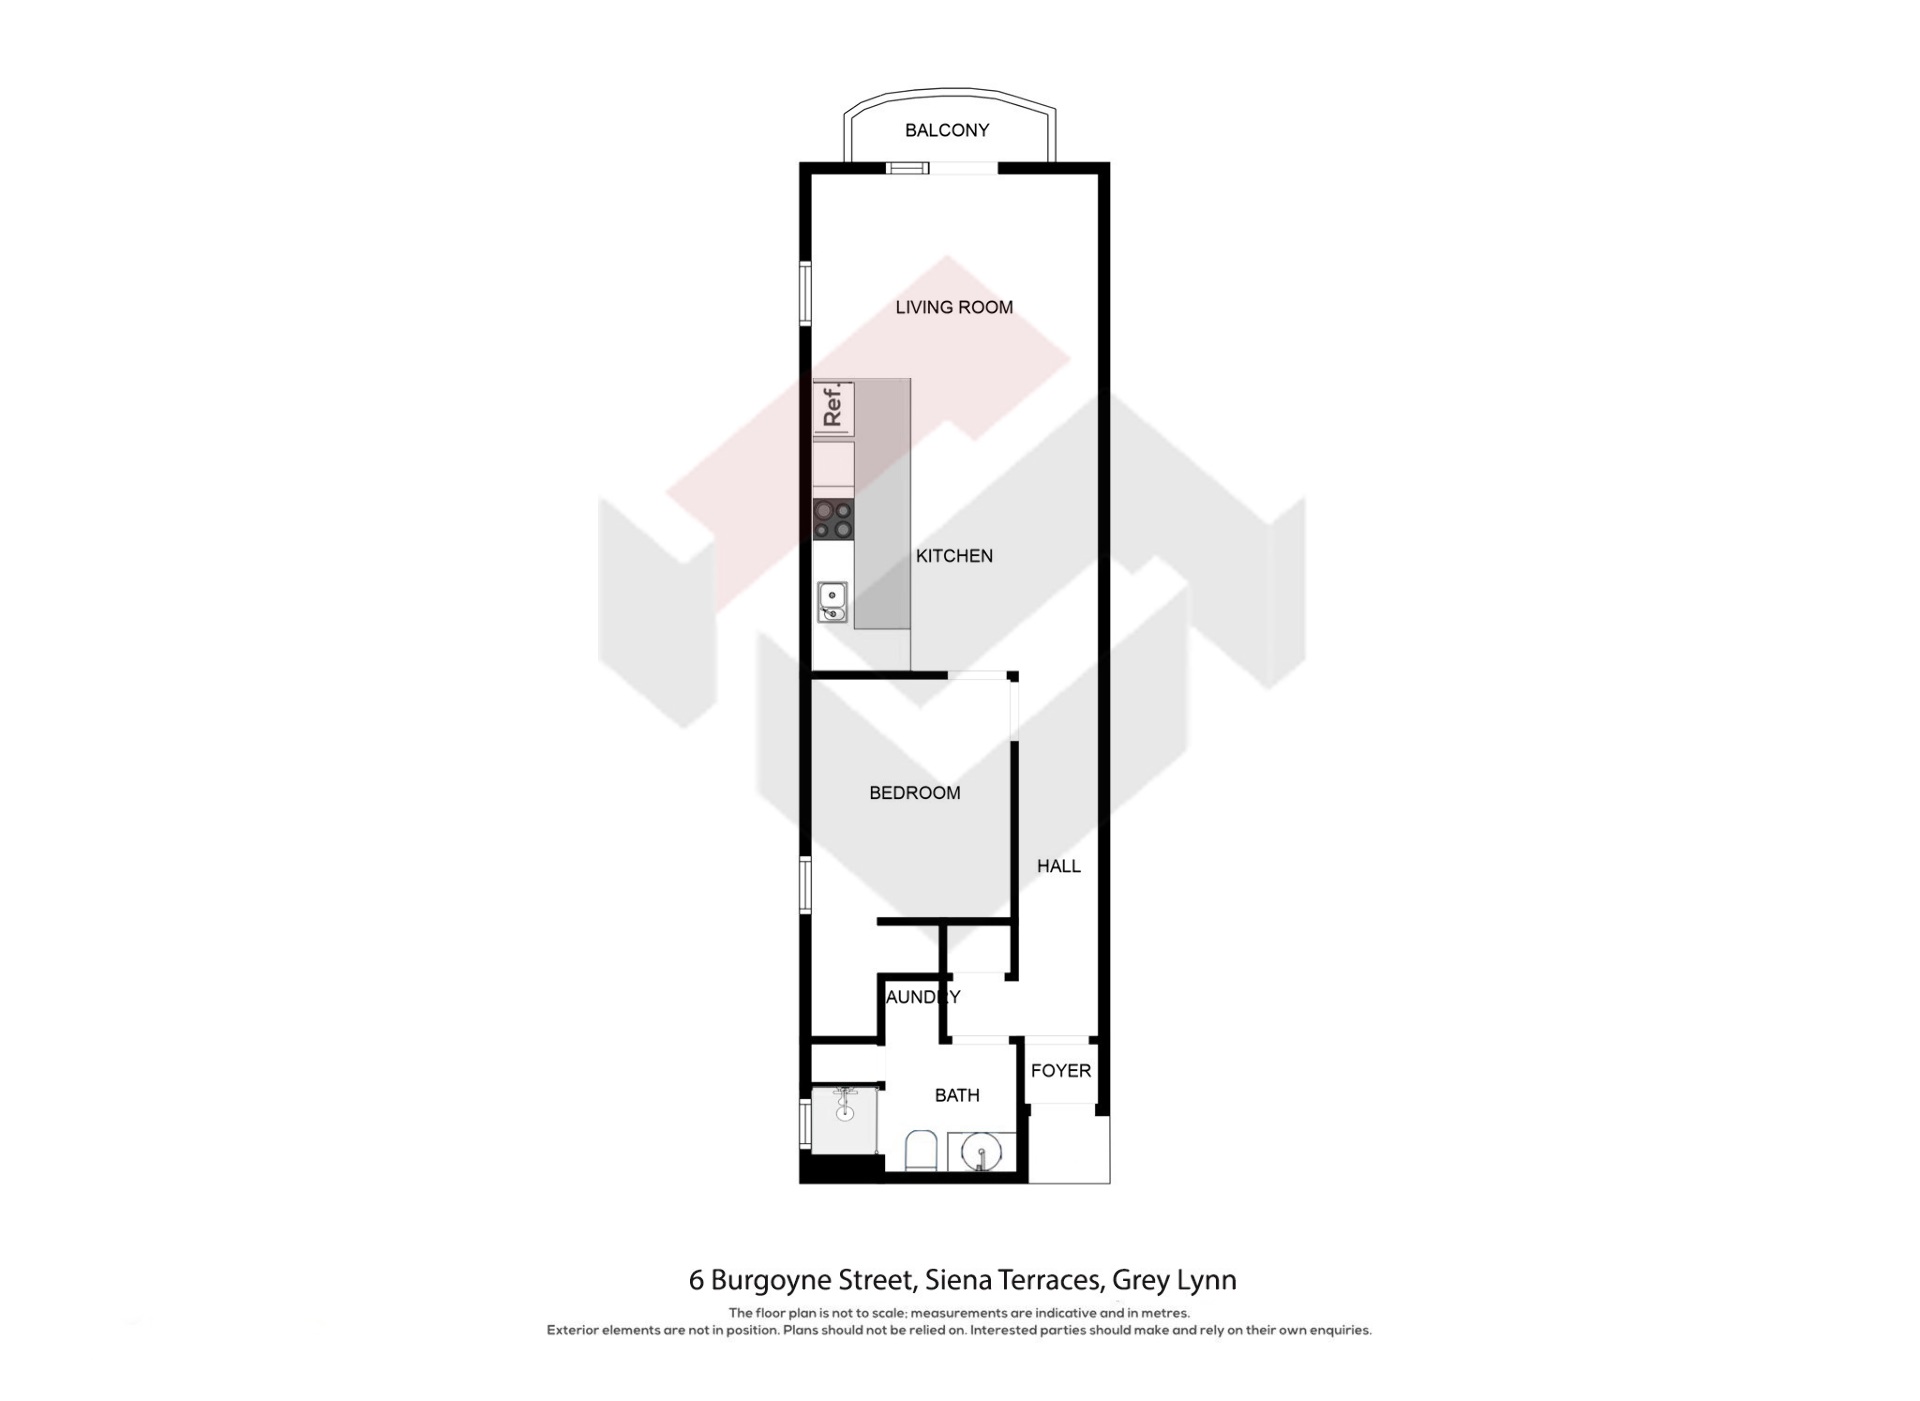 Floorplan | 6 Burgoyne Street, Grey Lynn | Apartment Specialists